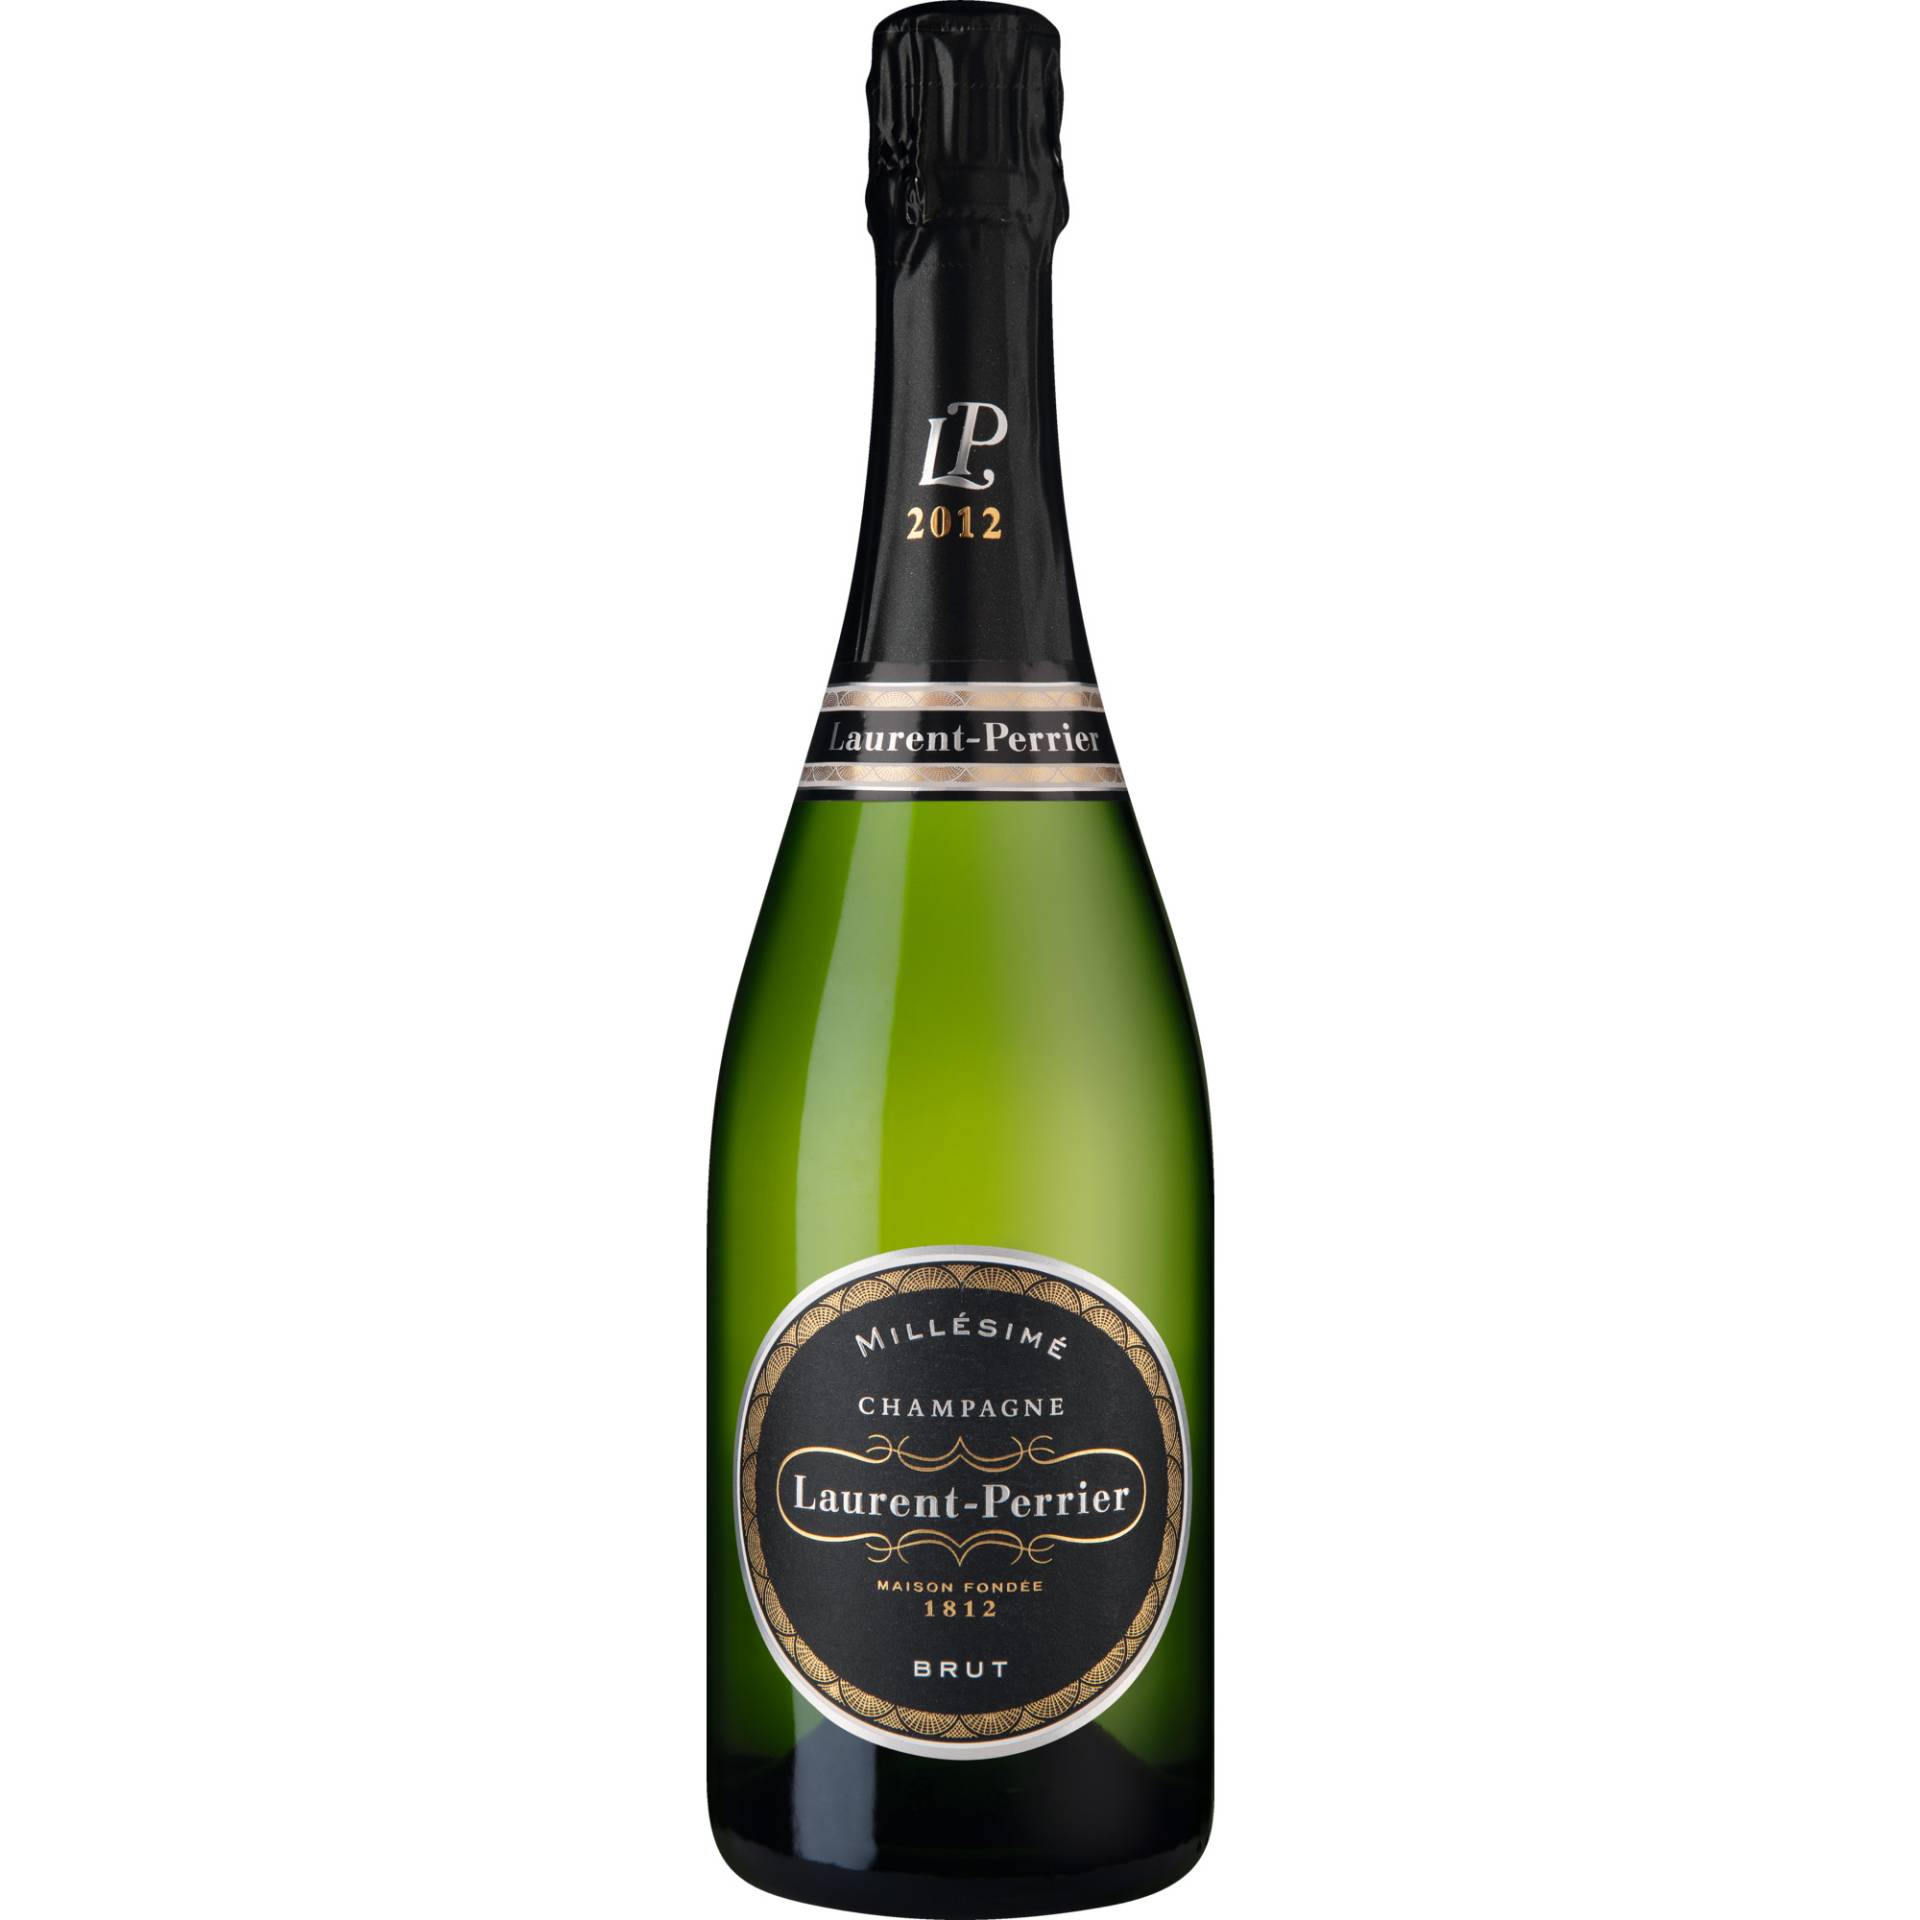 Champagne Laurent-Perrier, Brut, Champagne AC, Magnum, Champagne, 2012, Schaumwein von Champagne Laurent-Perrier, Tours-sur-Marne, France